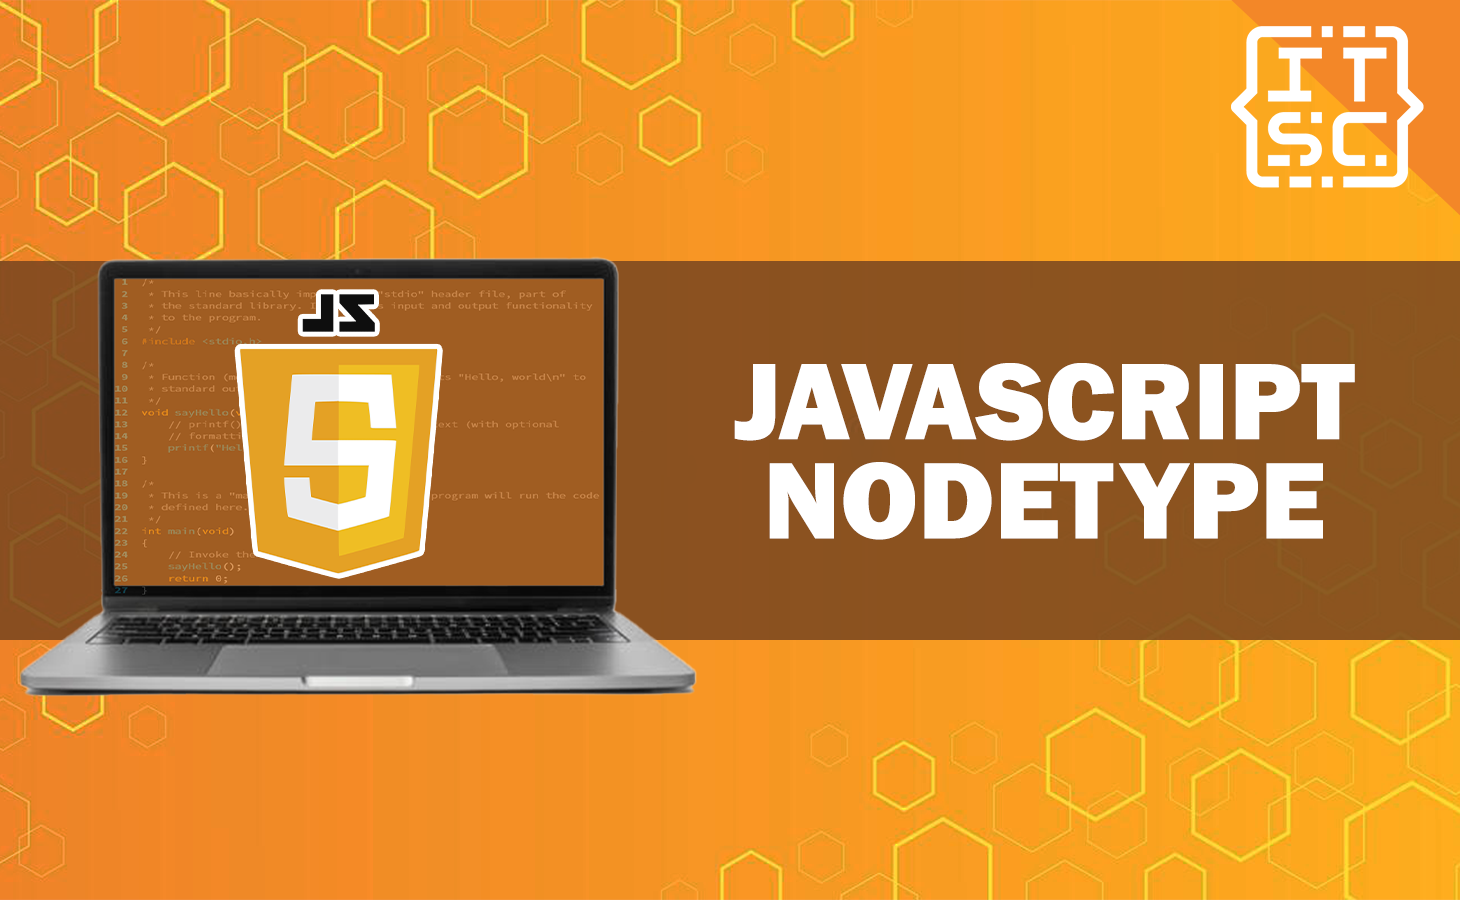 JavaScript nodeType